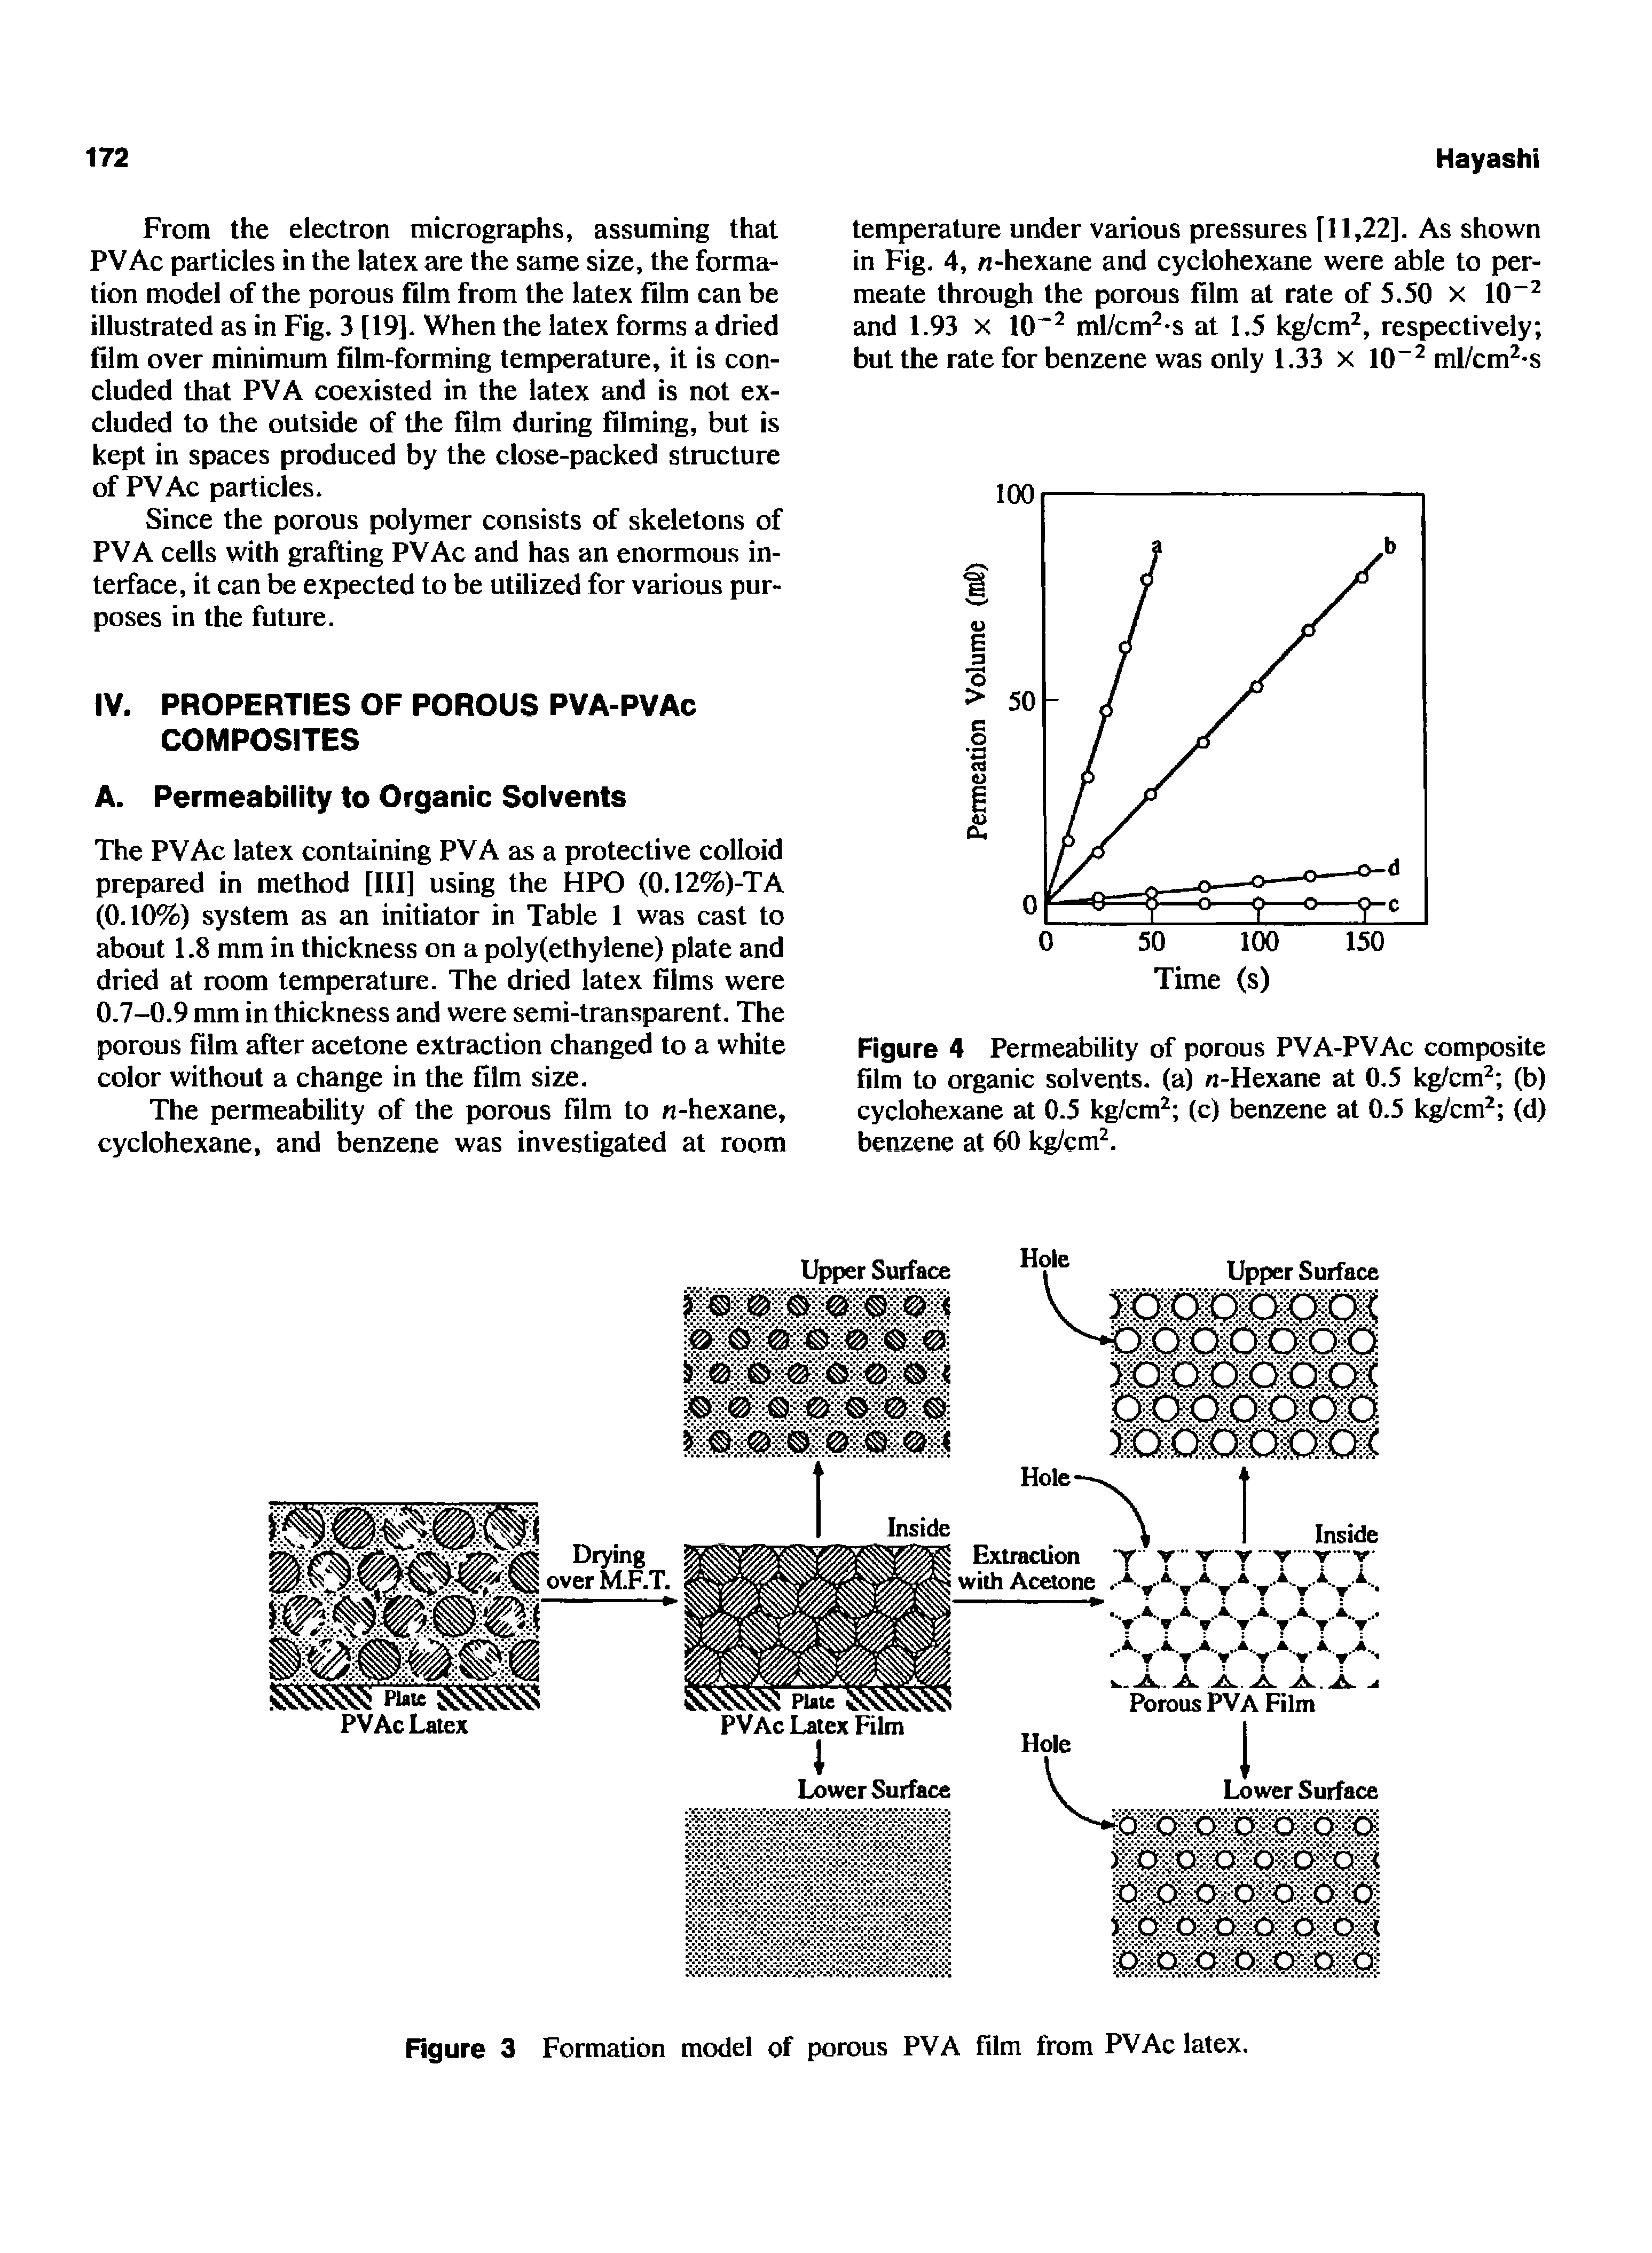 Figure 4 Permeability of porous PVA-PVAc composite film to organic solvents, (a) n-Hexane at 0.5 kg/cm (b) cyclohexane at 0.5 kg/cm (c) benzene at 0.5 kg/cm (d) benzene at 60 kg/cm. ...